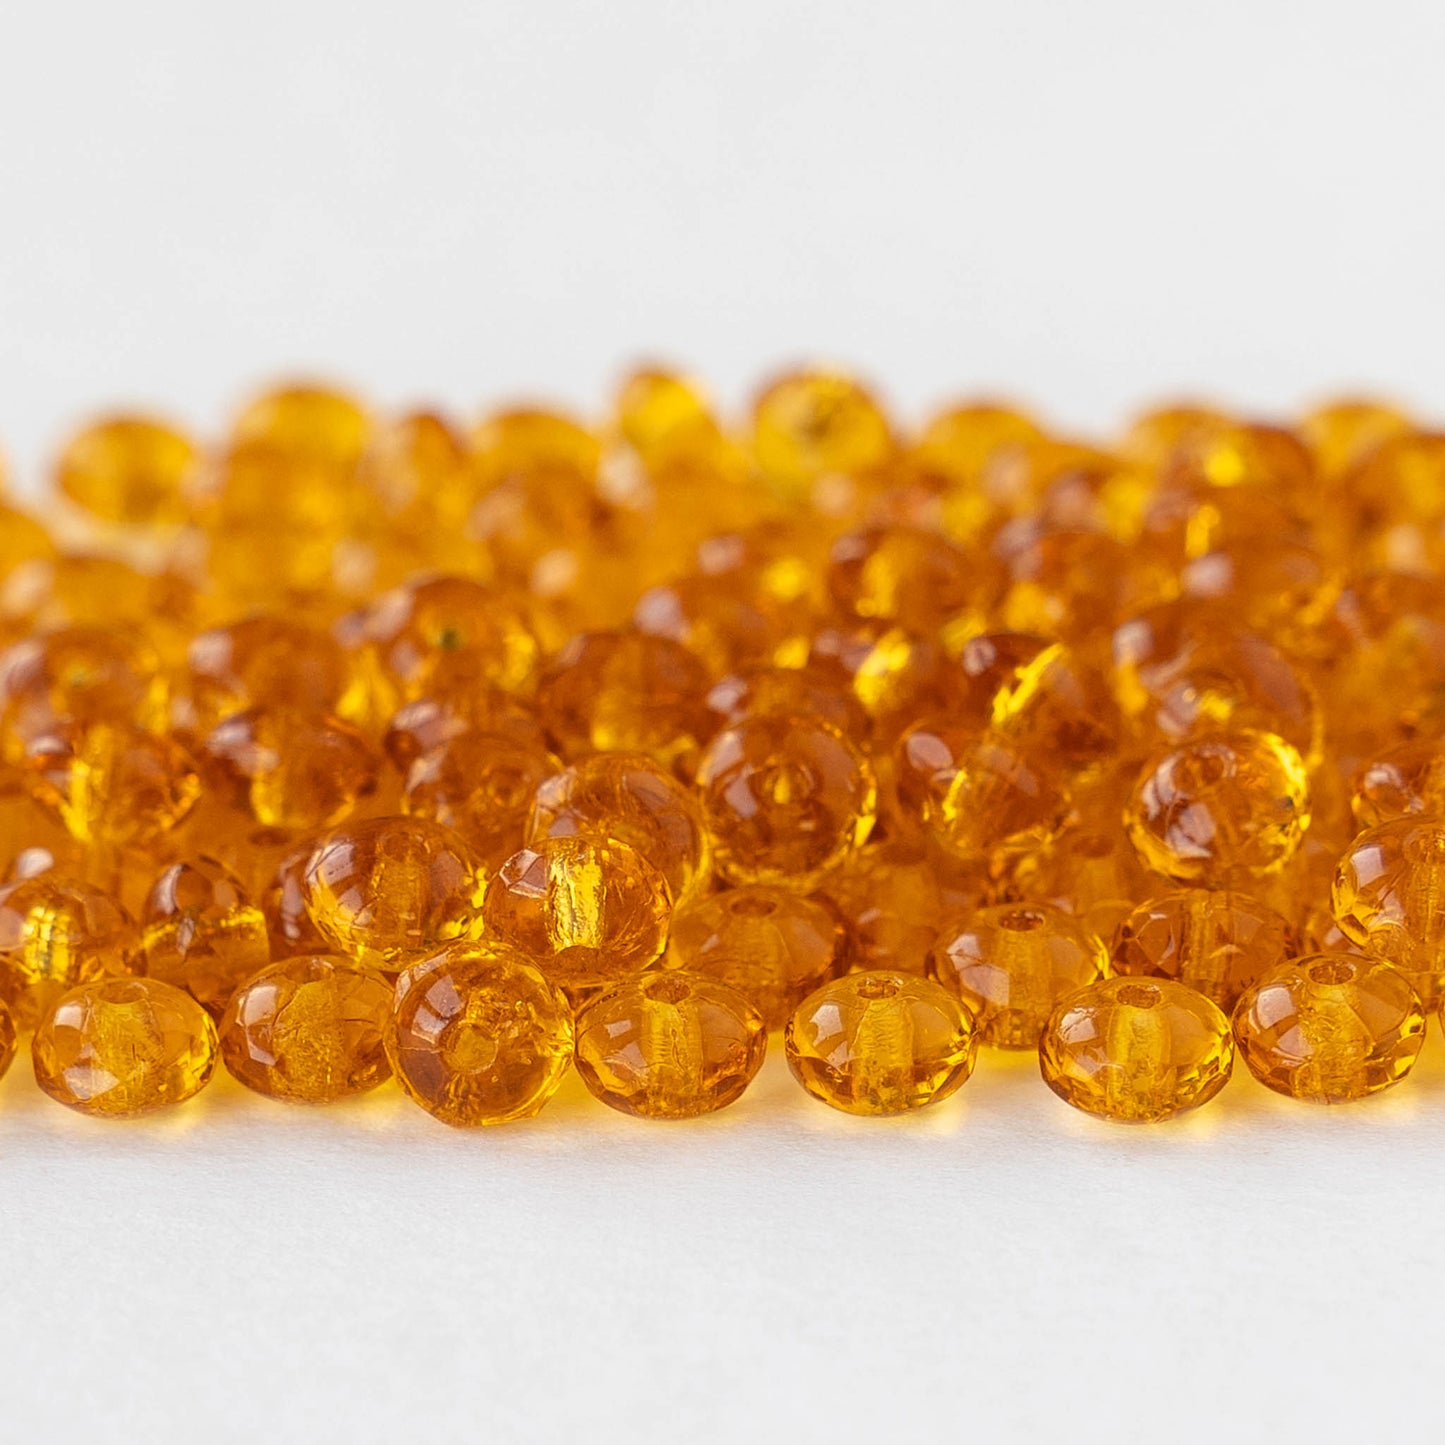 3x5mm Rondelle Beads - Transparent Golden Amber - 30 Beads